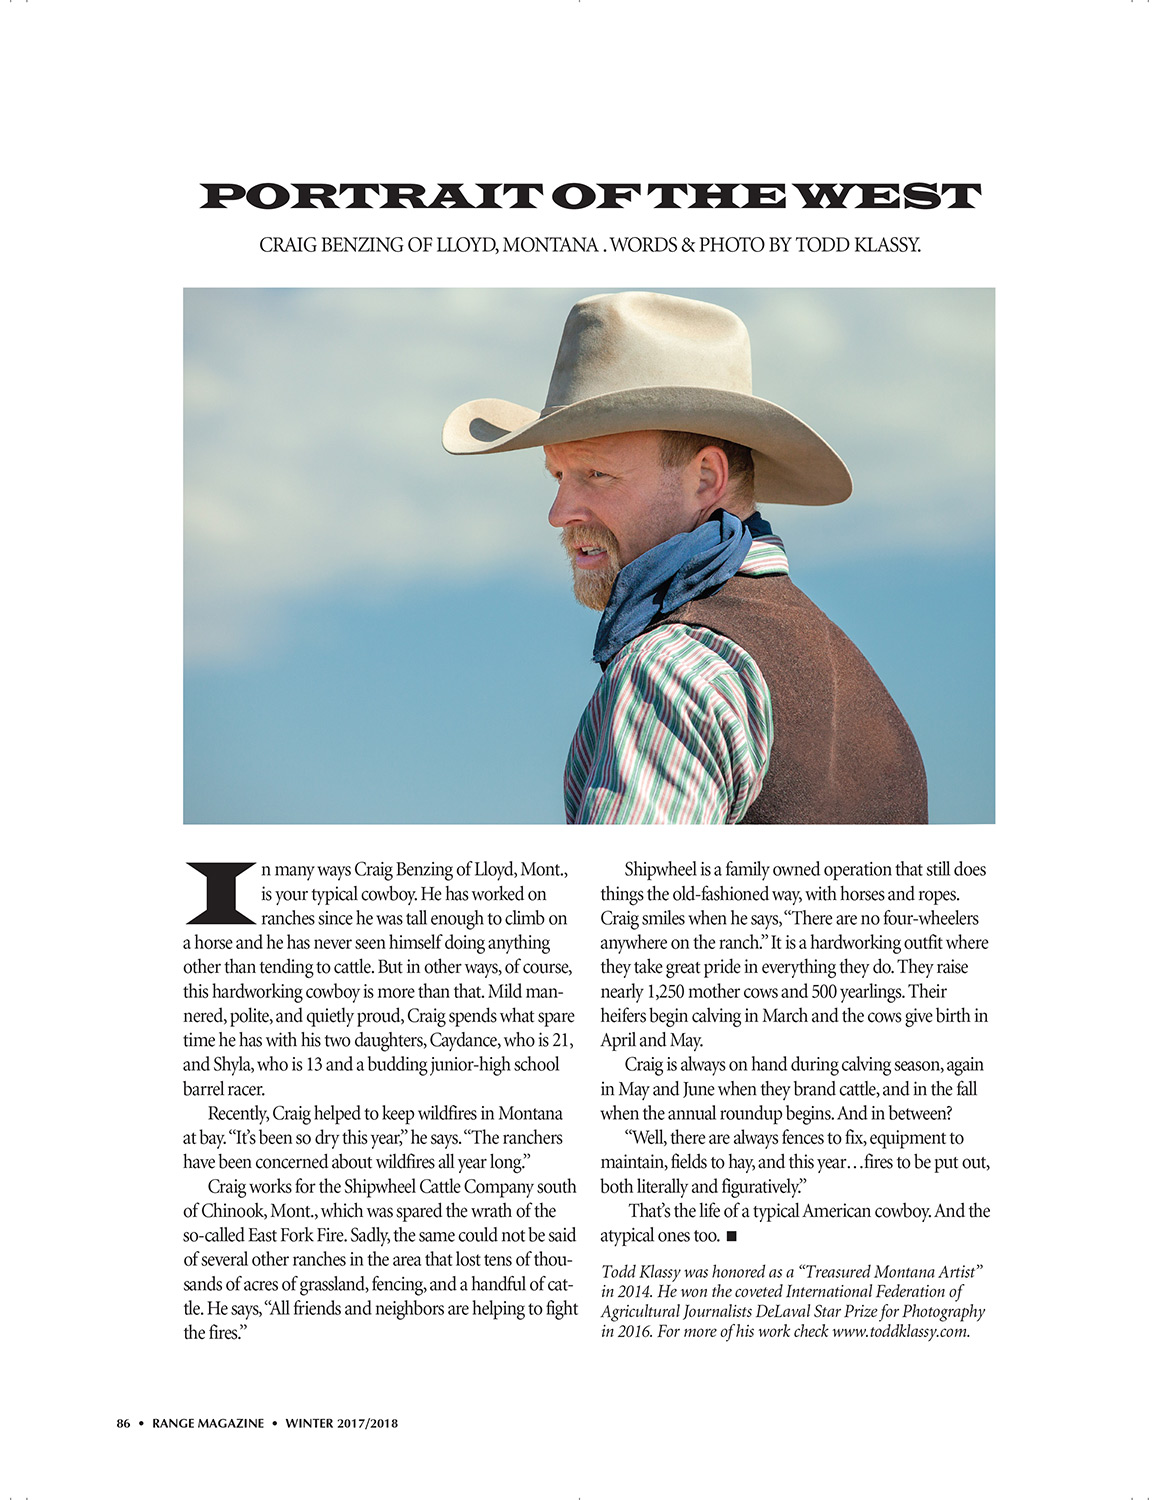 Portrait of a Cowboy Article Stock Photography Range Magazine